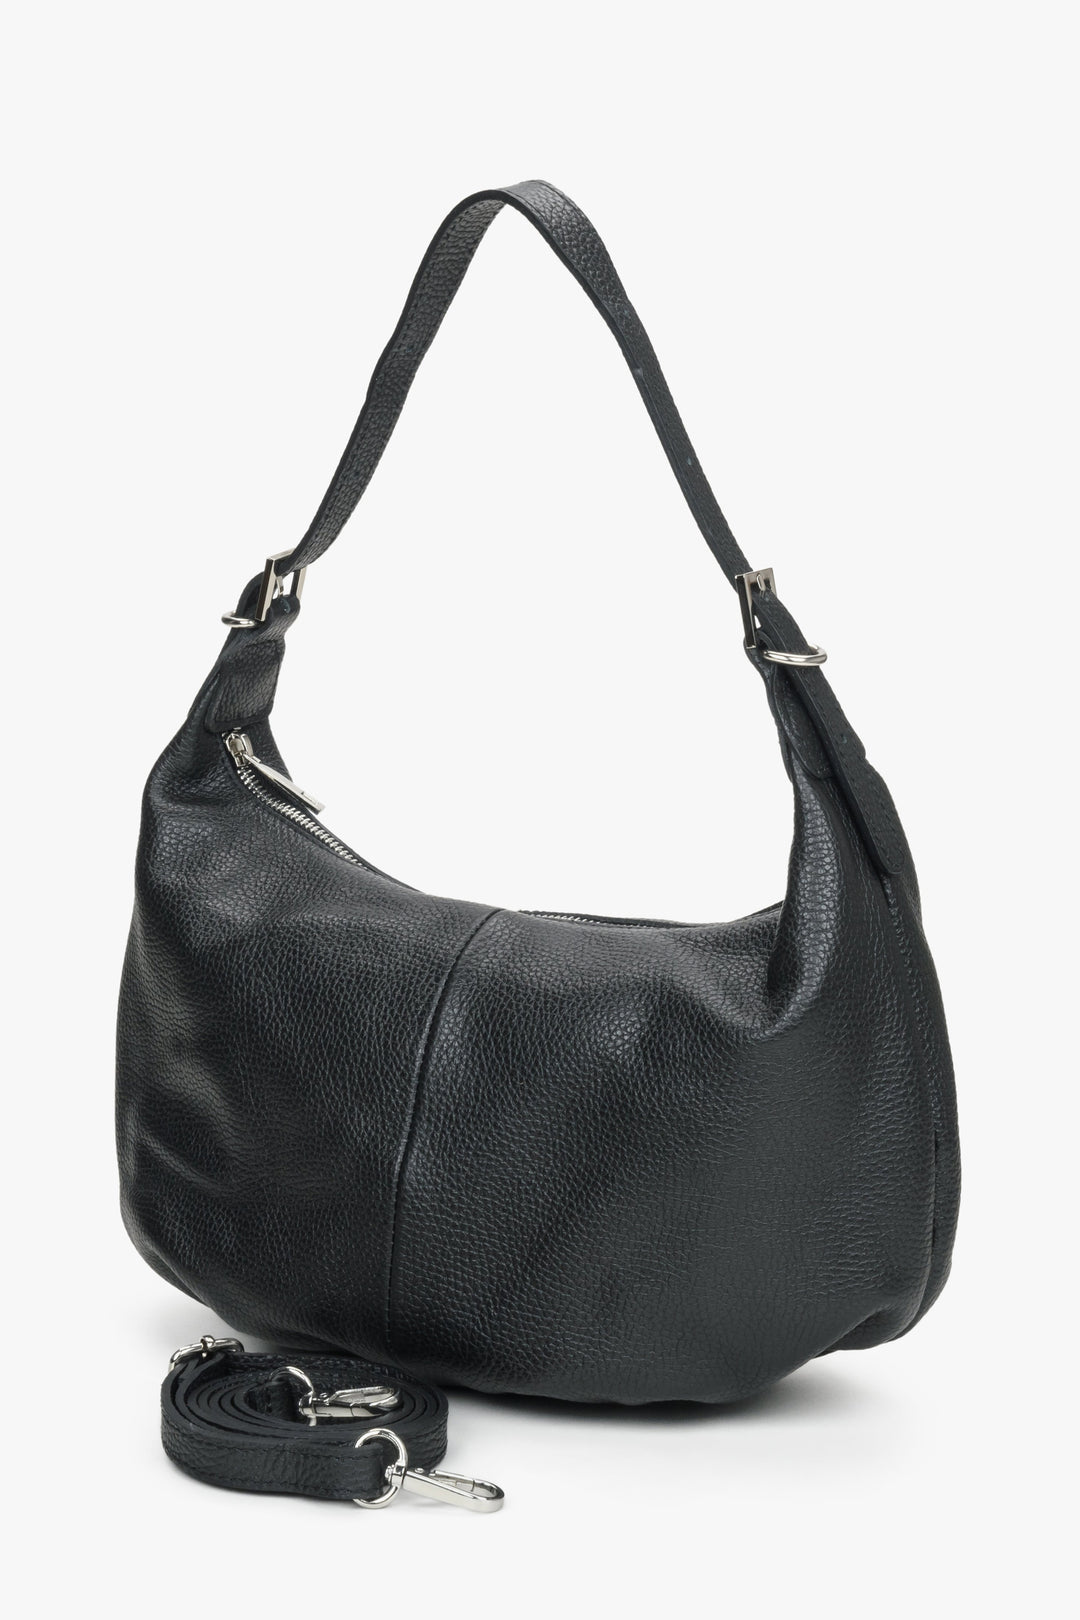 Black spacious baguette bag made of Italian genuine leather.